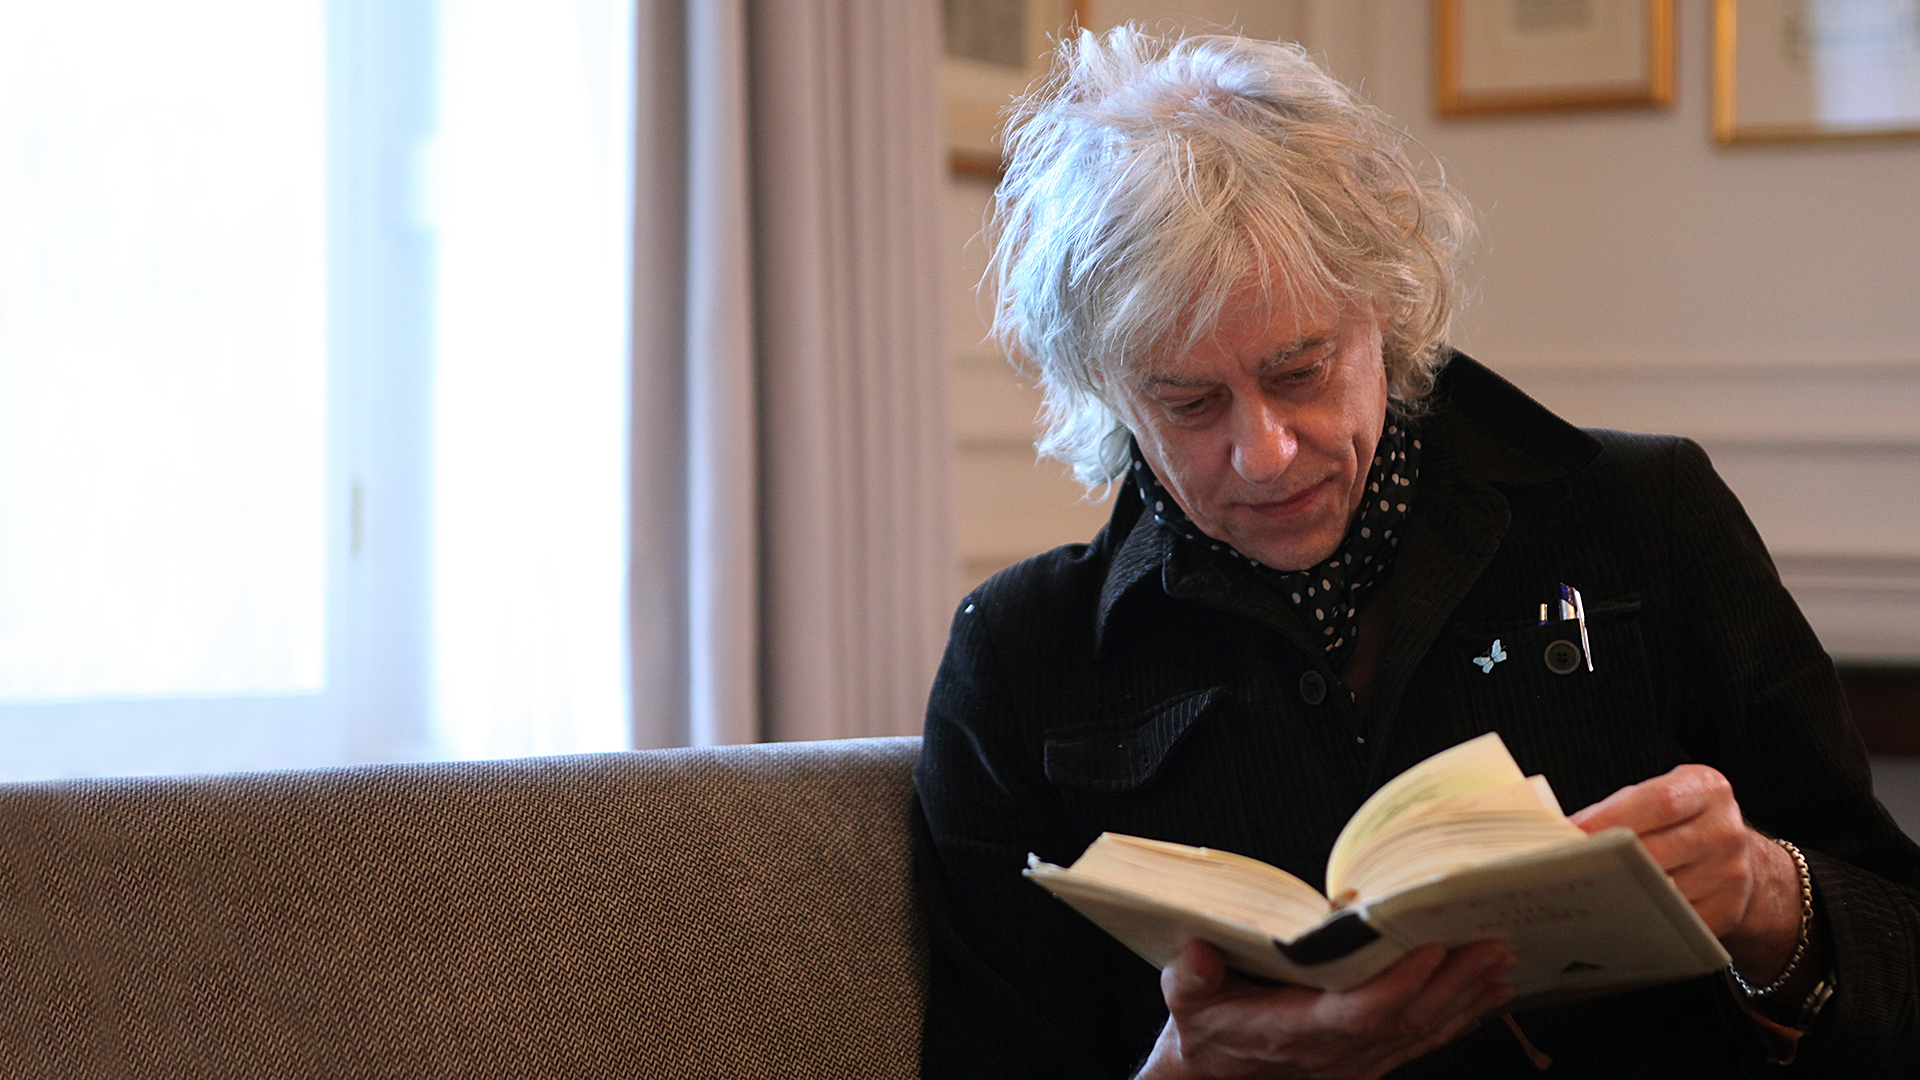 Bob Geldof on W.B. Yeats - A Fanatic Heart